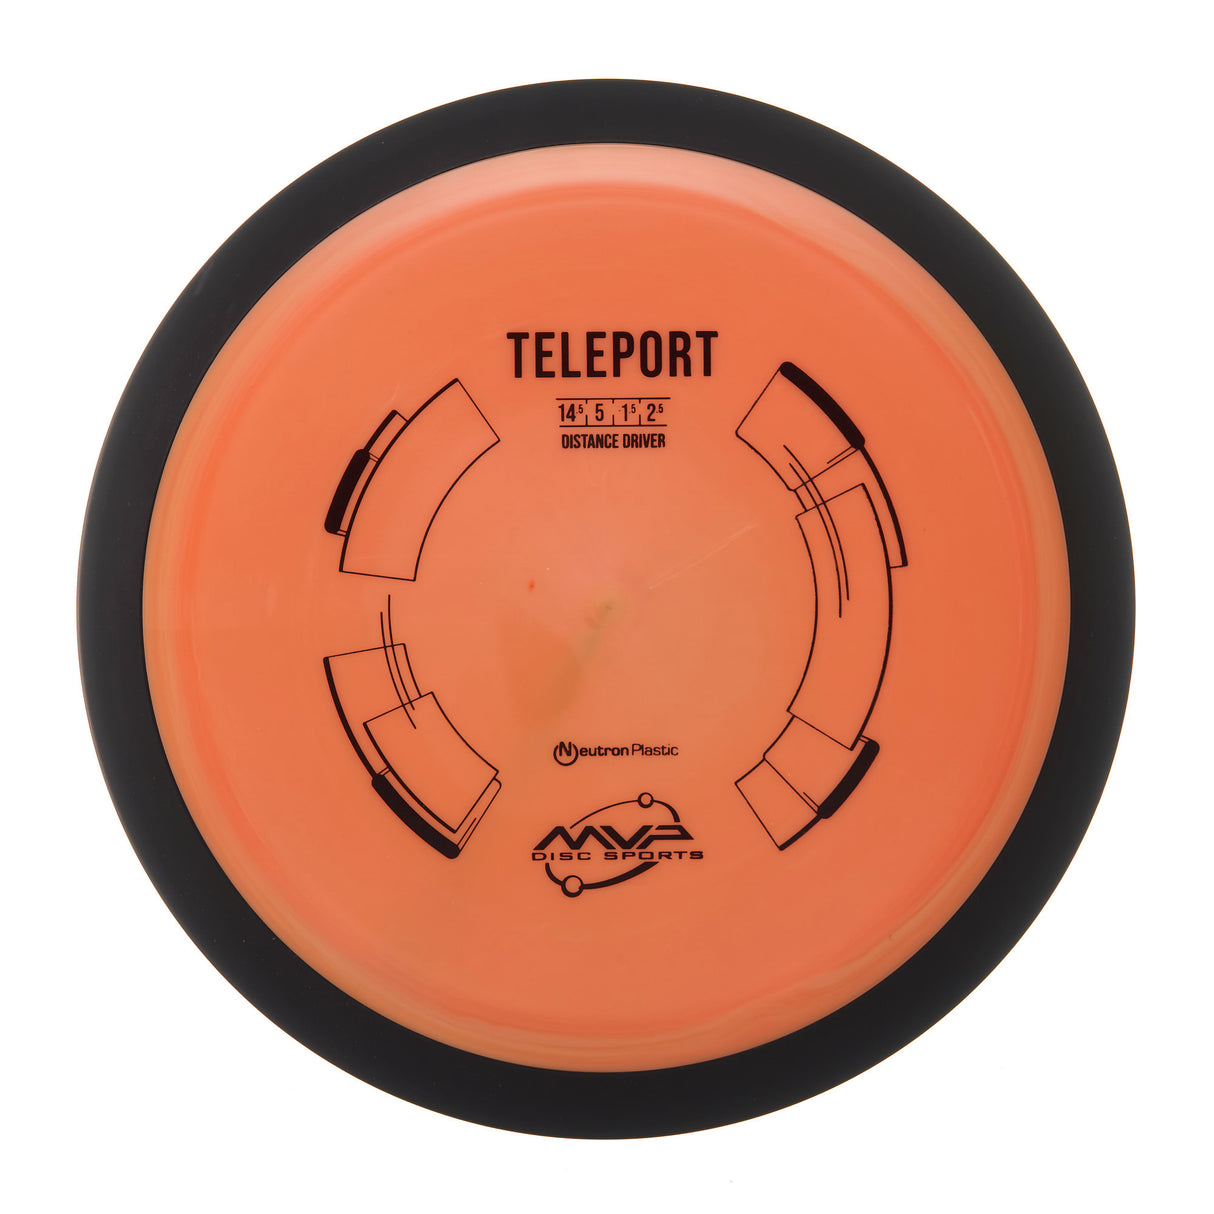 MVP Teleport - Neutron 176g | Style 0011